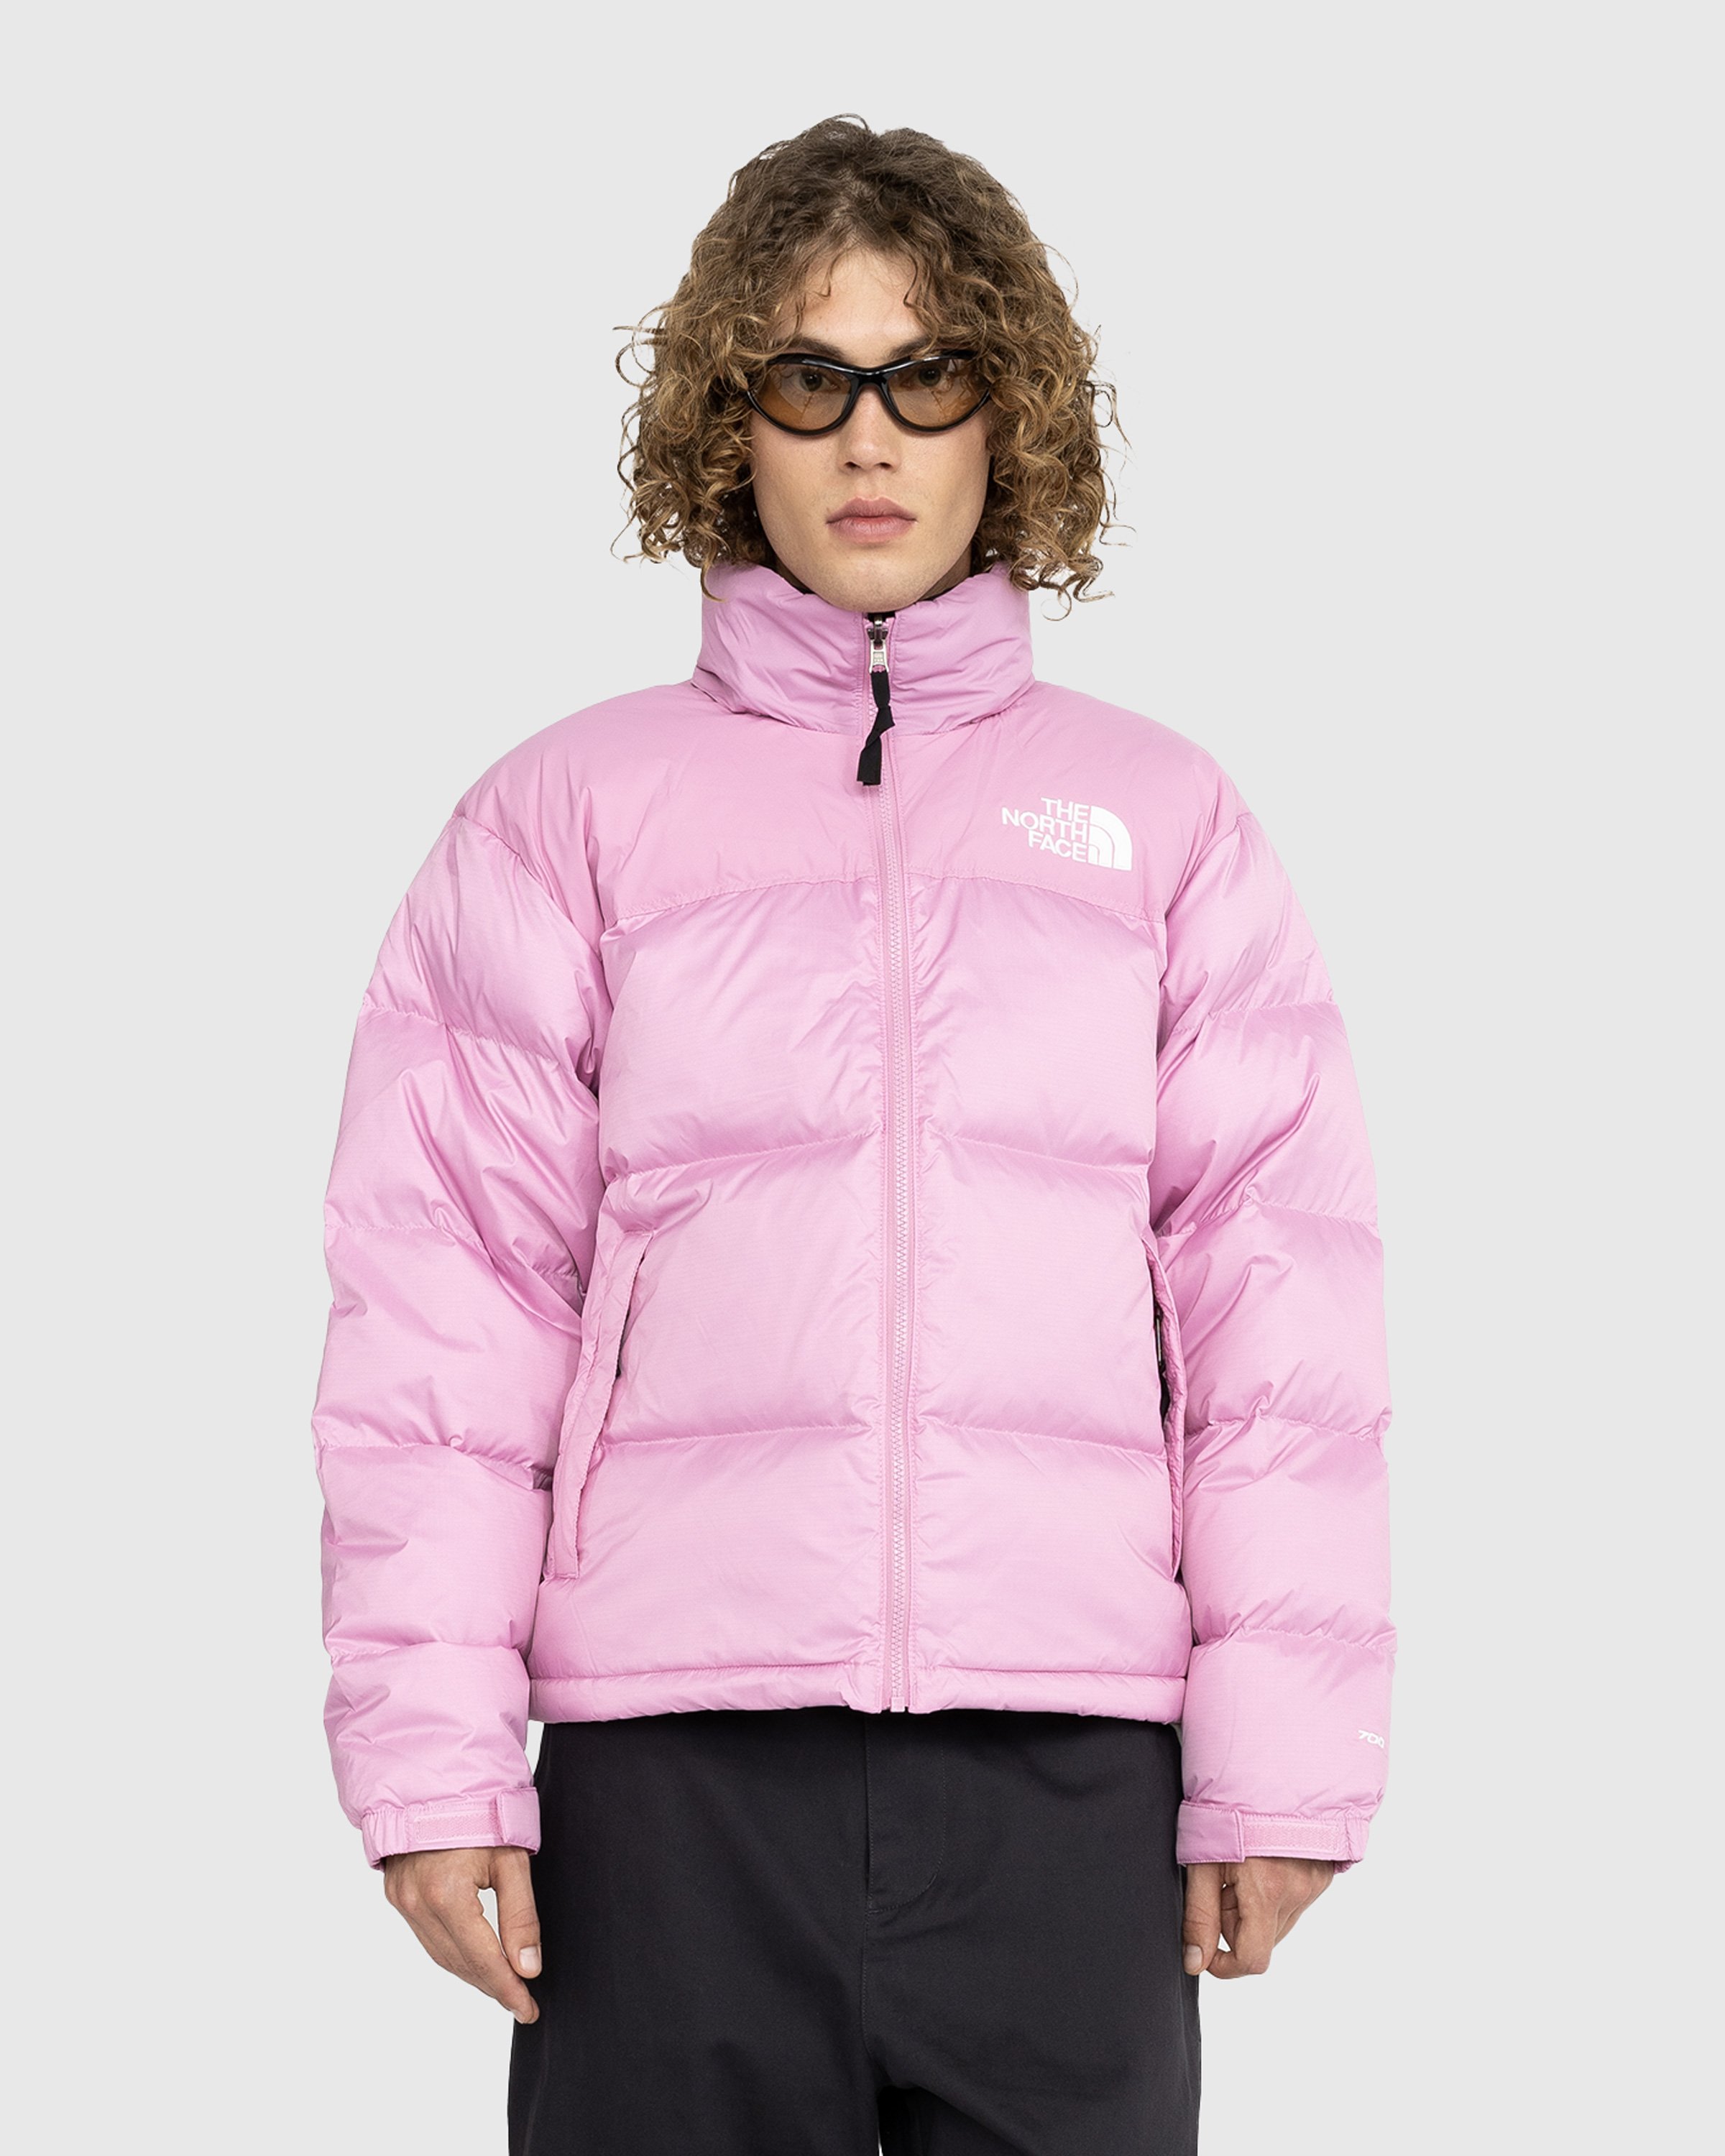 The North Face - 1996 Retro Nuptse Jacket Pink - Clothing - Pink - Image 2